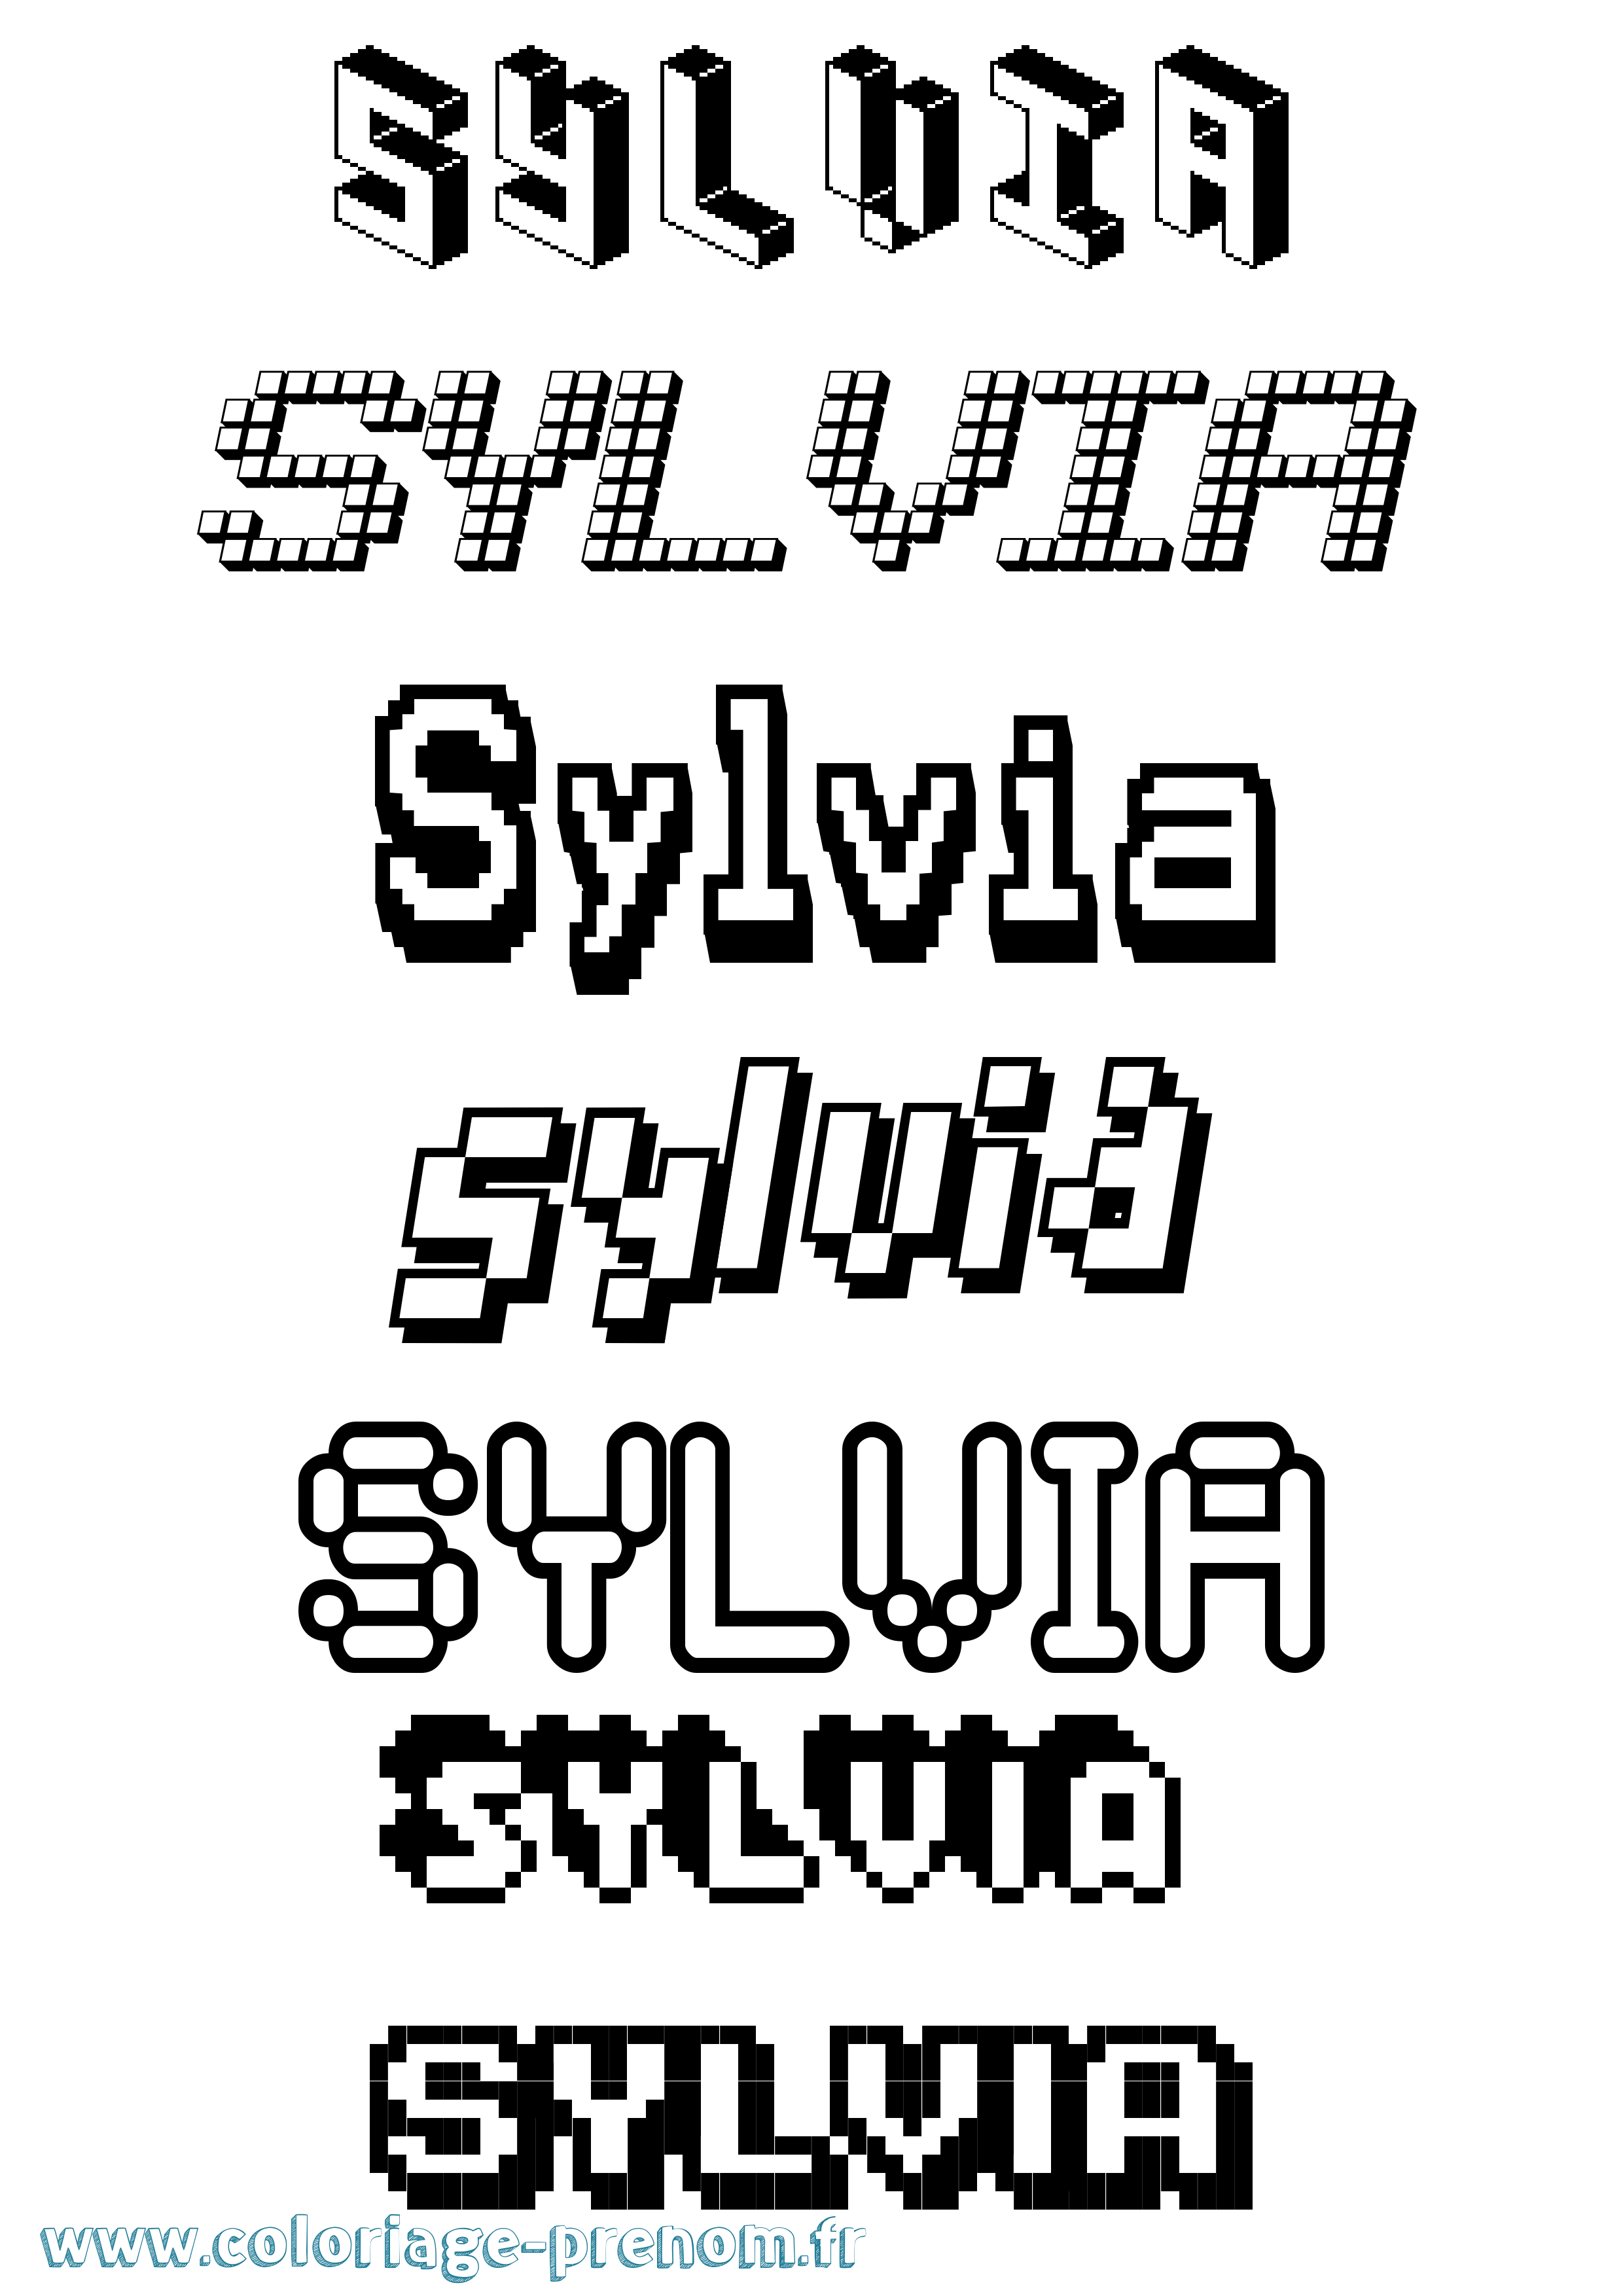 Coloriage prénom Sylvia